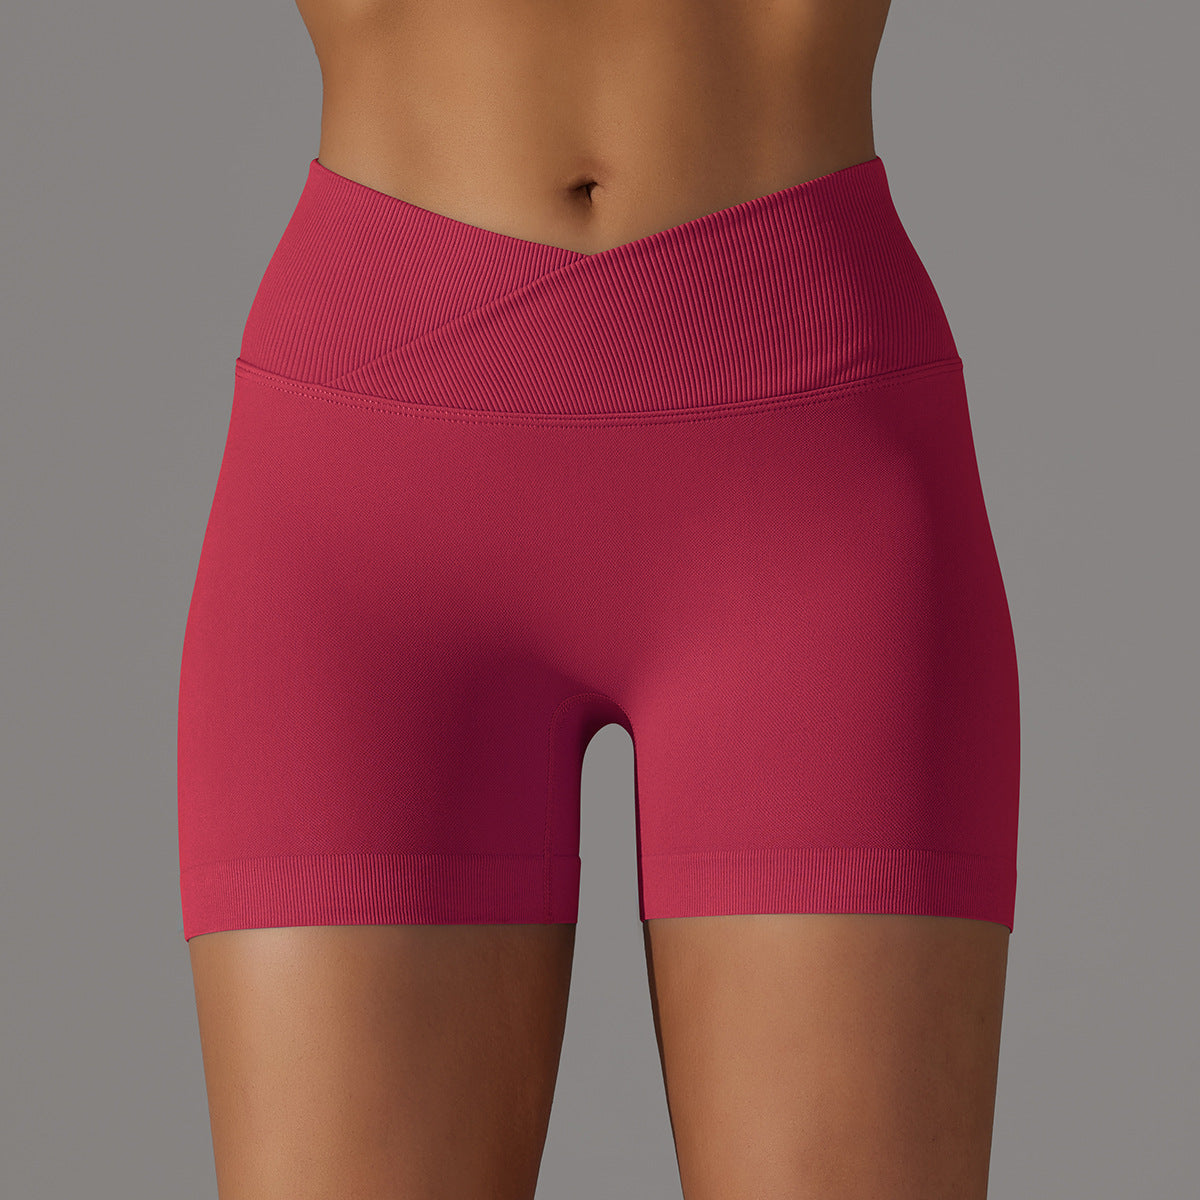 Solid color cross waist peach butt yoga shorts three-quarter pants 15colors